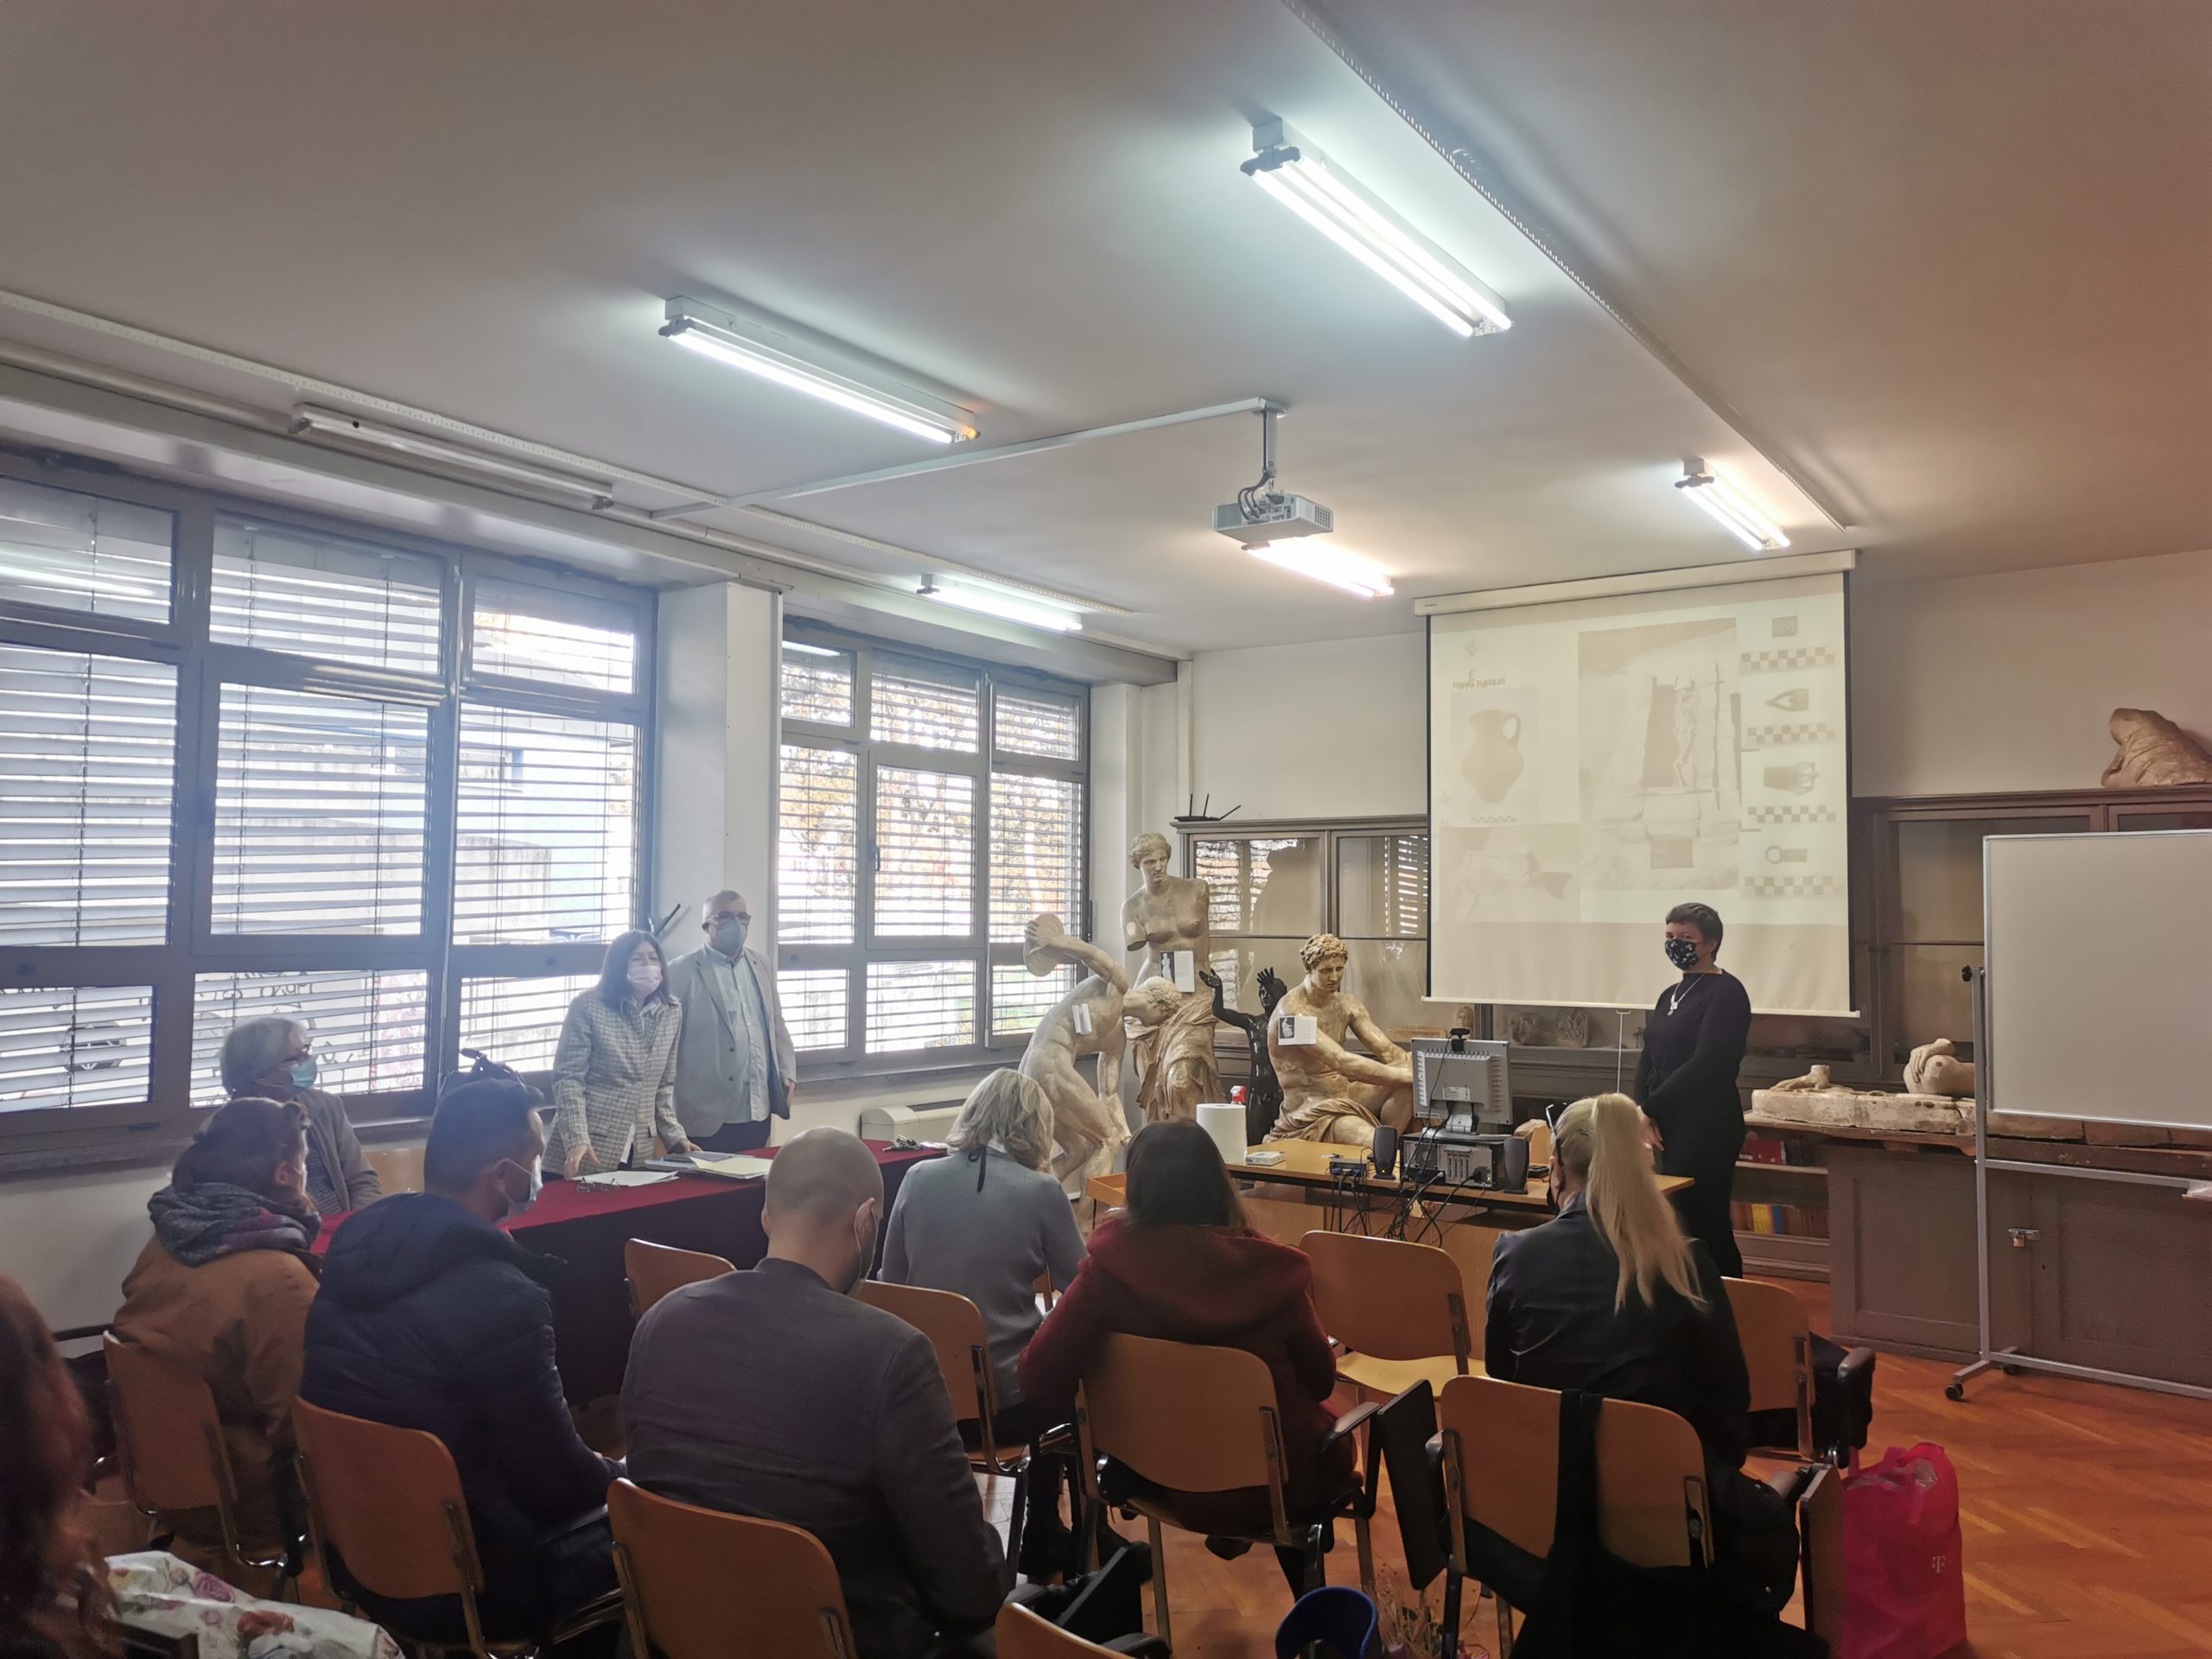 Održana je javna obrana doktorskog rada Anite Rapan Papeša